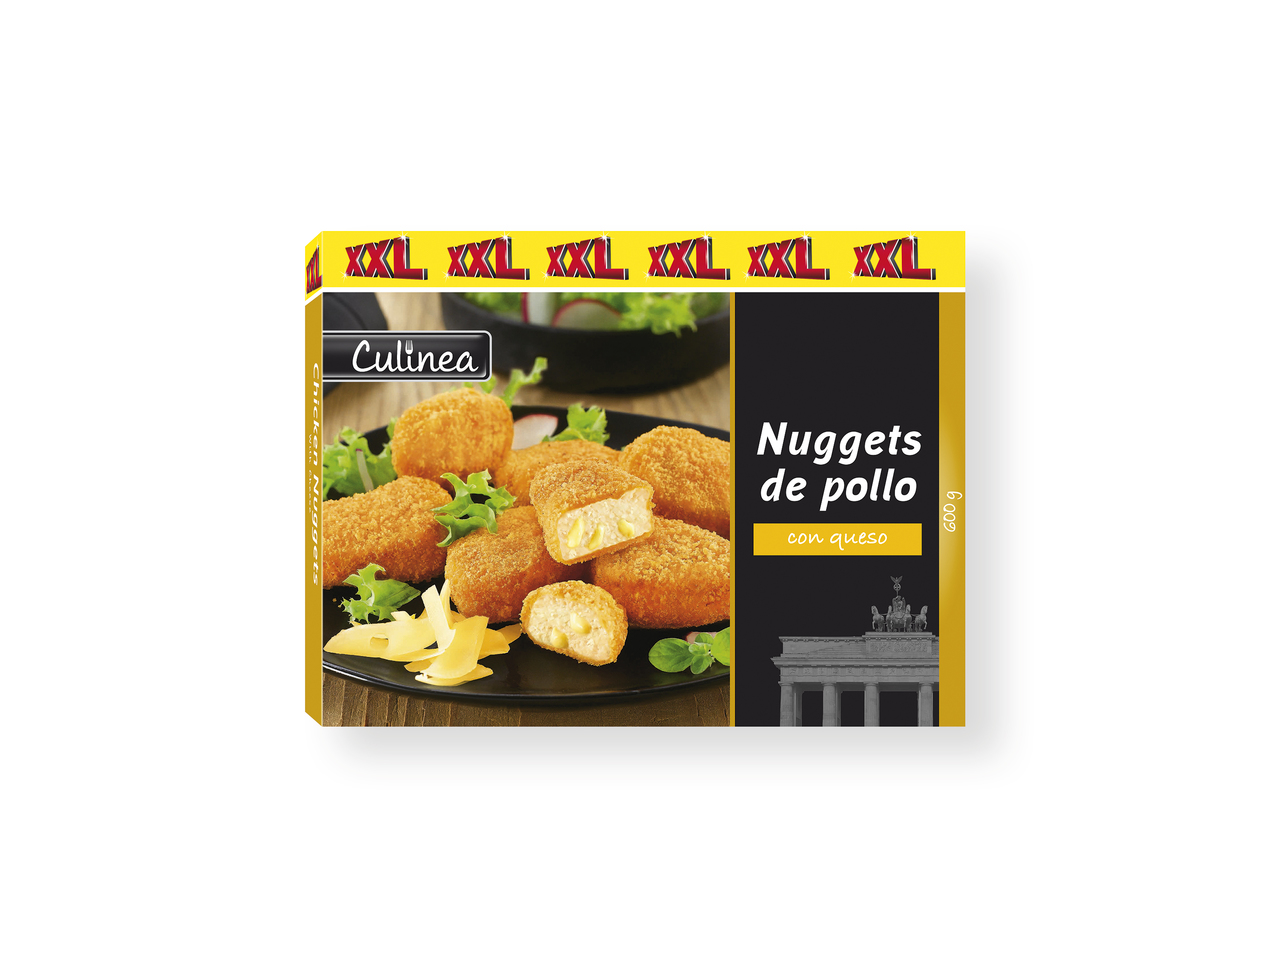 'Culinea(R)' Nuggets de pollo